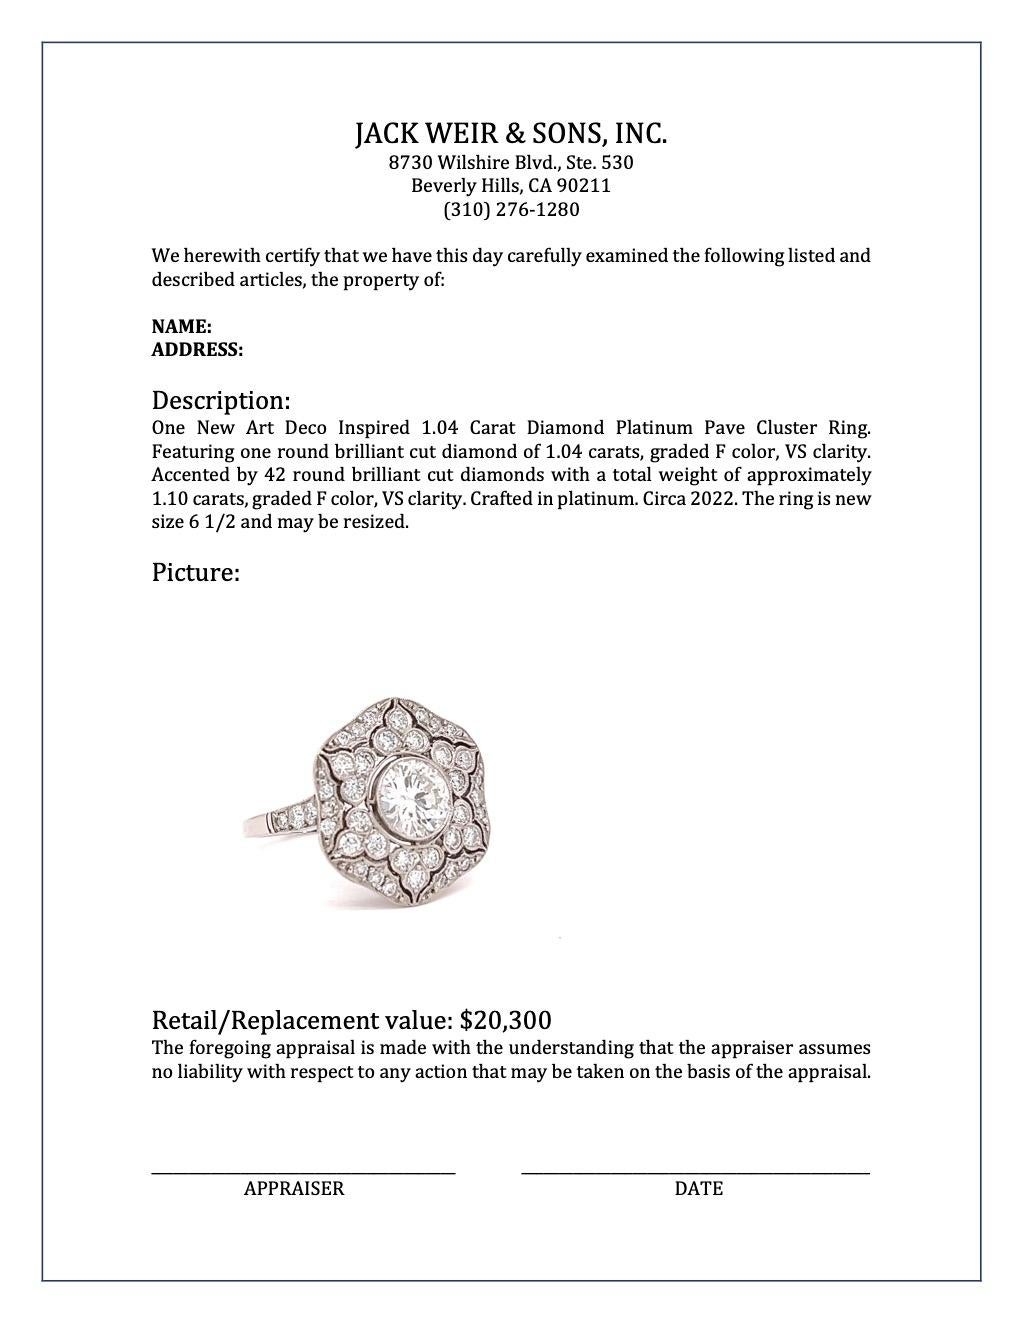 Art Deco Inspired 1.04 Carat Brilliant Cut Diamond Platinum Pave Cluster Ring For Sale 3